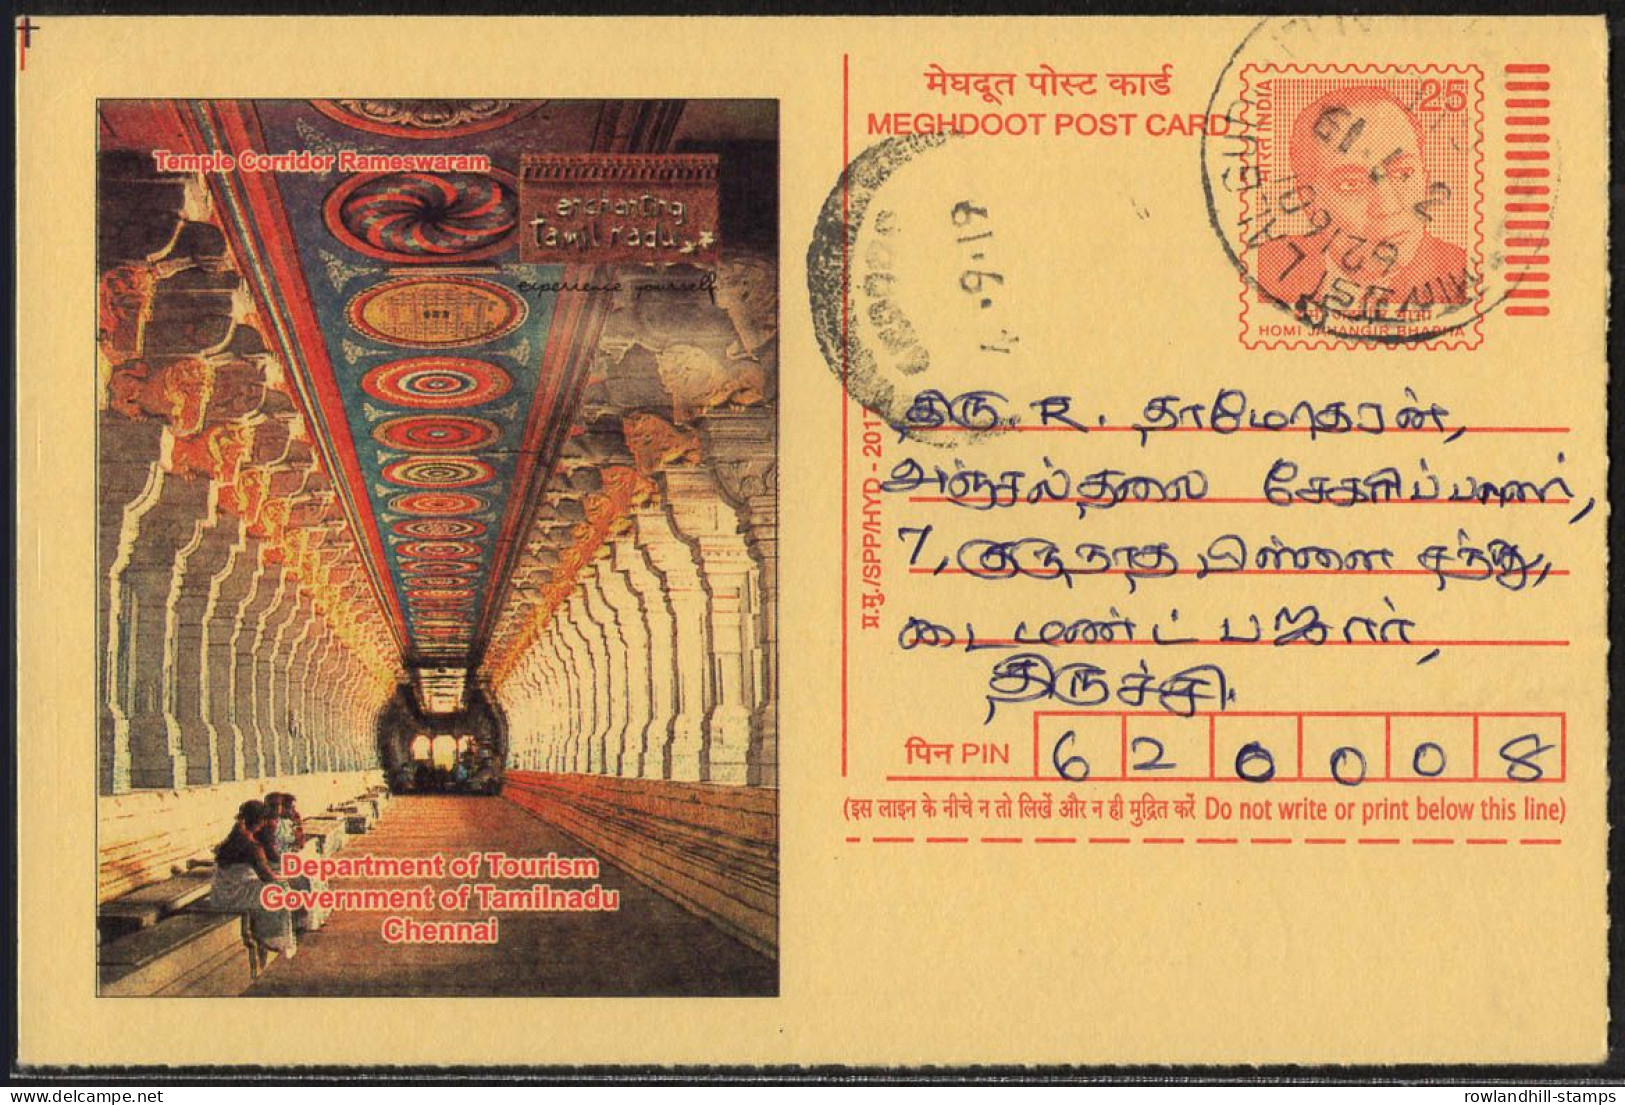 India, 2017, Temple Corridor RAMESWARAM, Meghdoot Post Card, Hinduism, Tourism, Tamilnadu, Architecture, Religion, A23 - Hinduismus